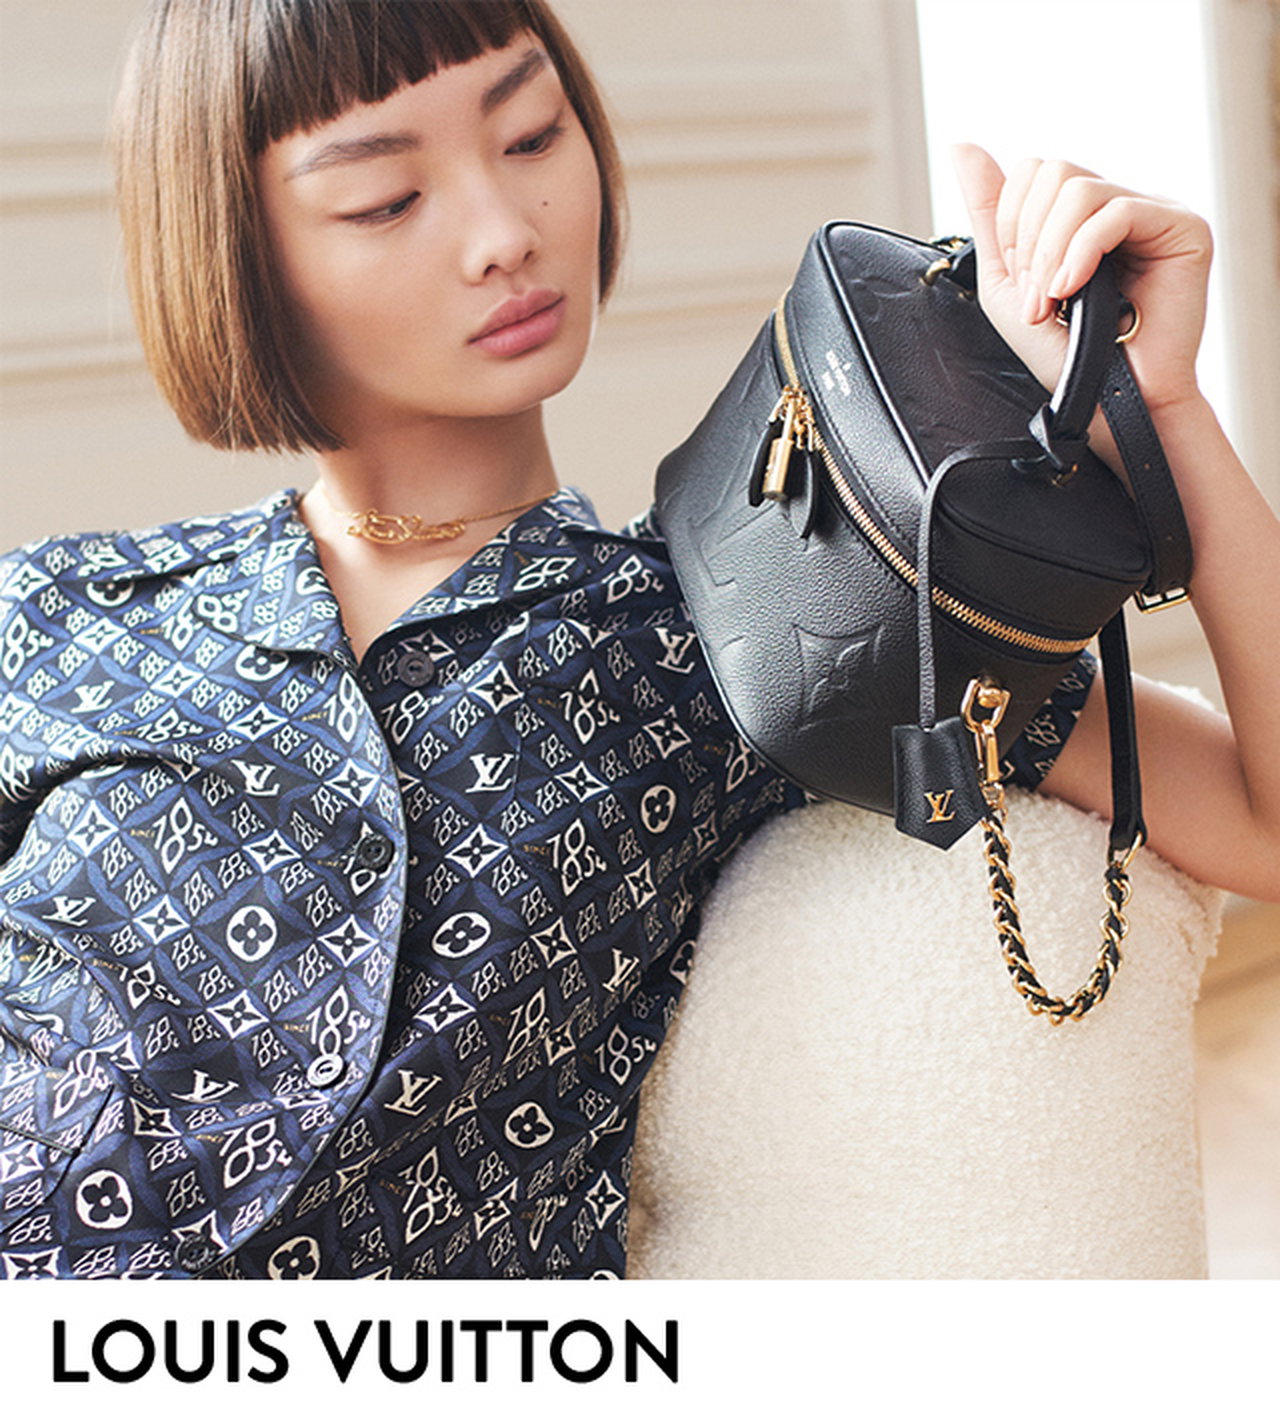 Best Deals for Nordstrom Louis Vuitton Handbags